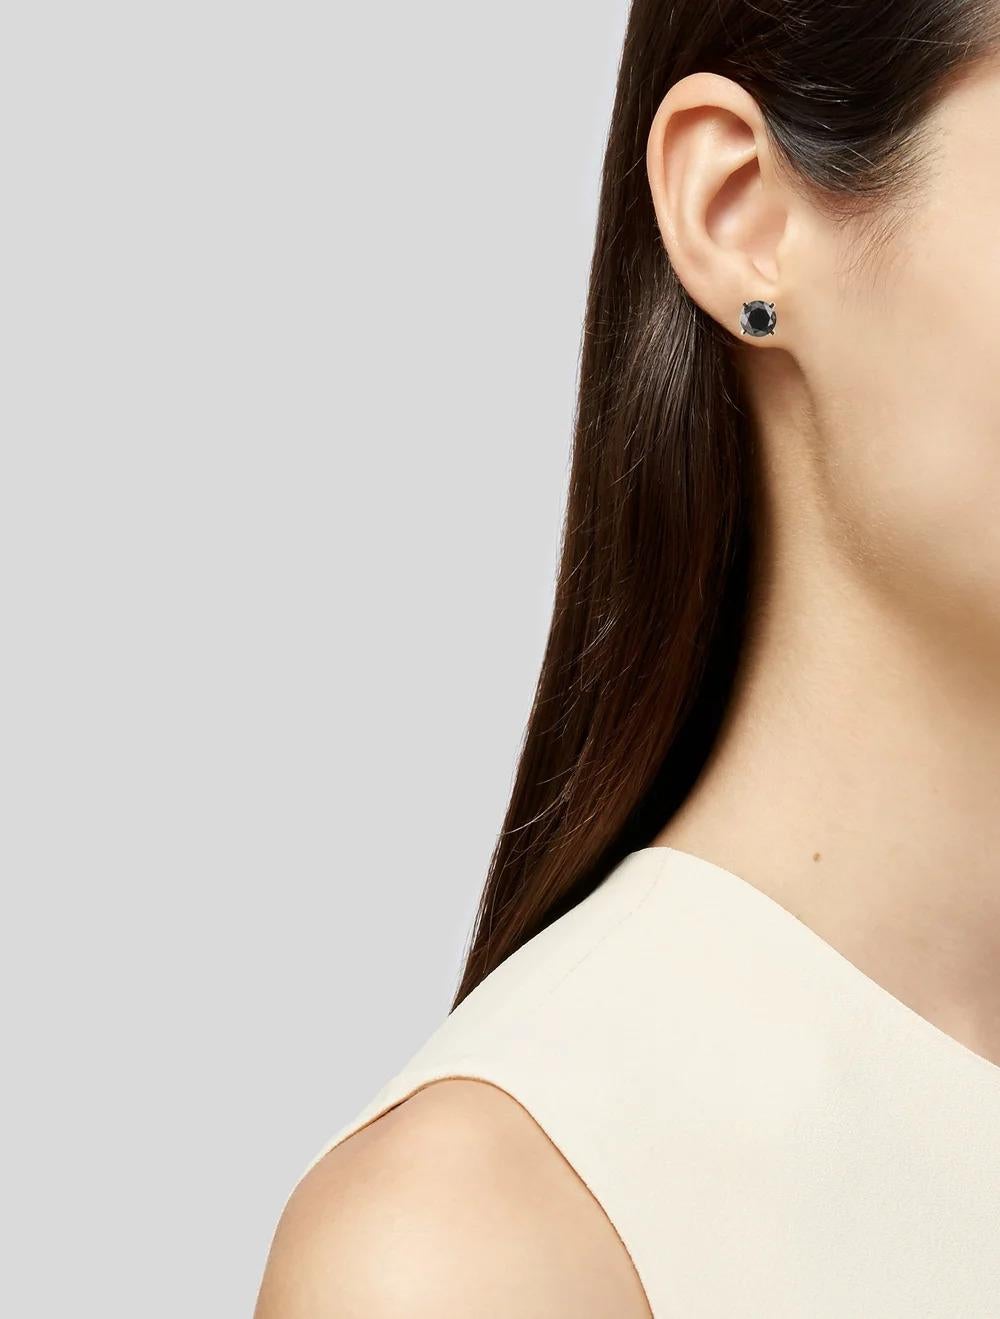 Round Cut 14K Diamond Stud Earrings 4.91ctw - Timeless & Elegant Statement Jewelry, Luxury For Sale